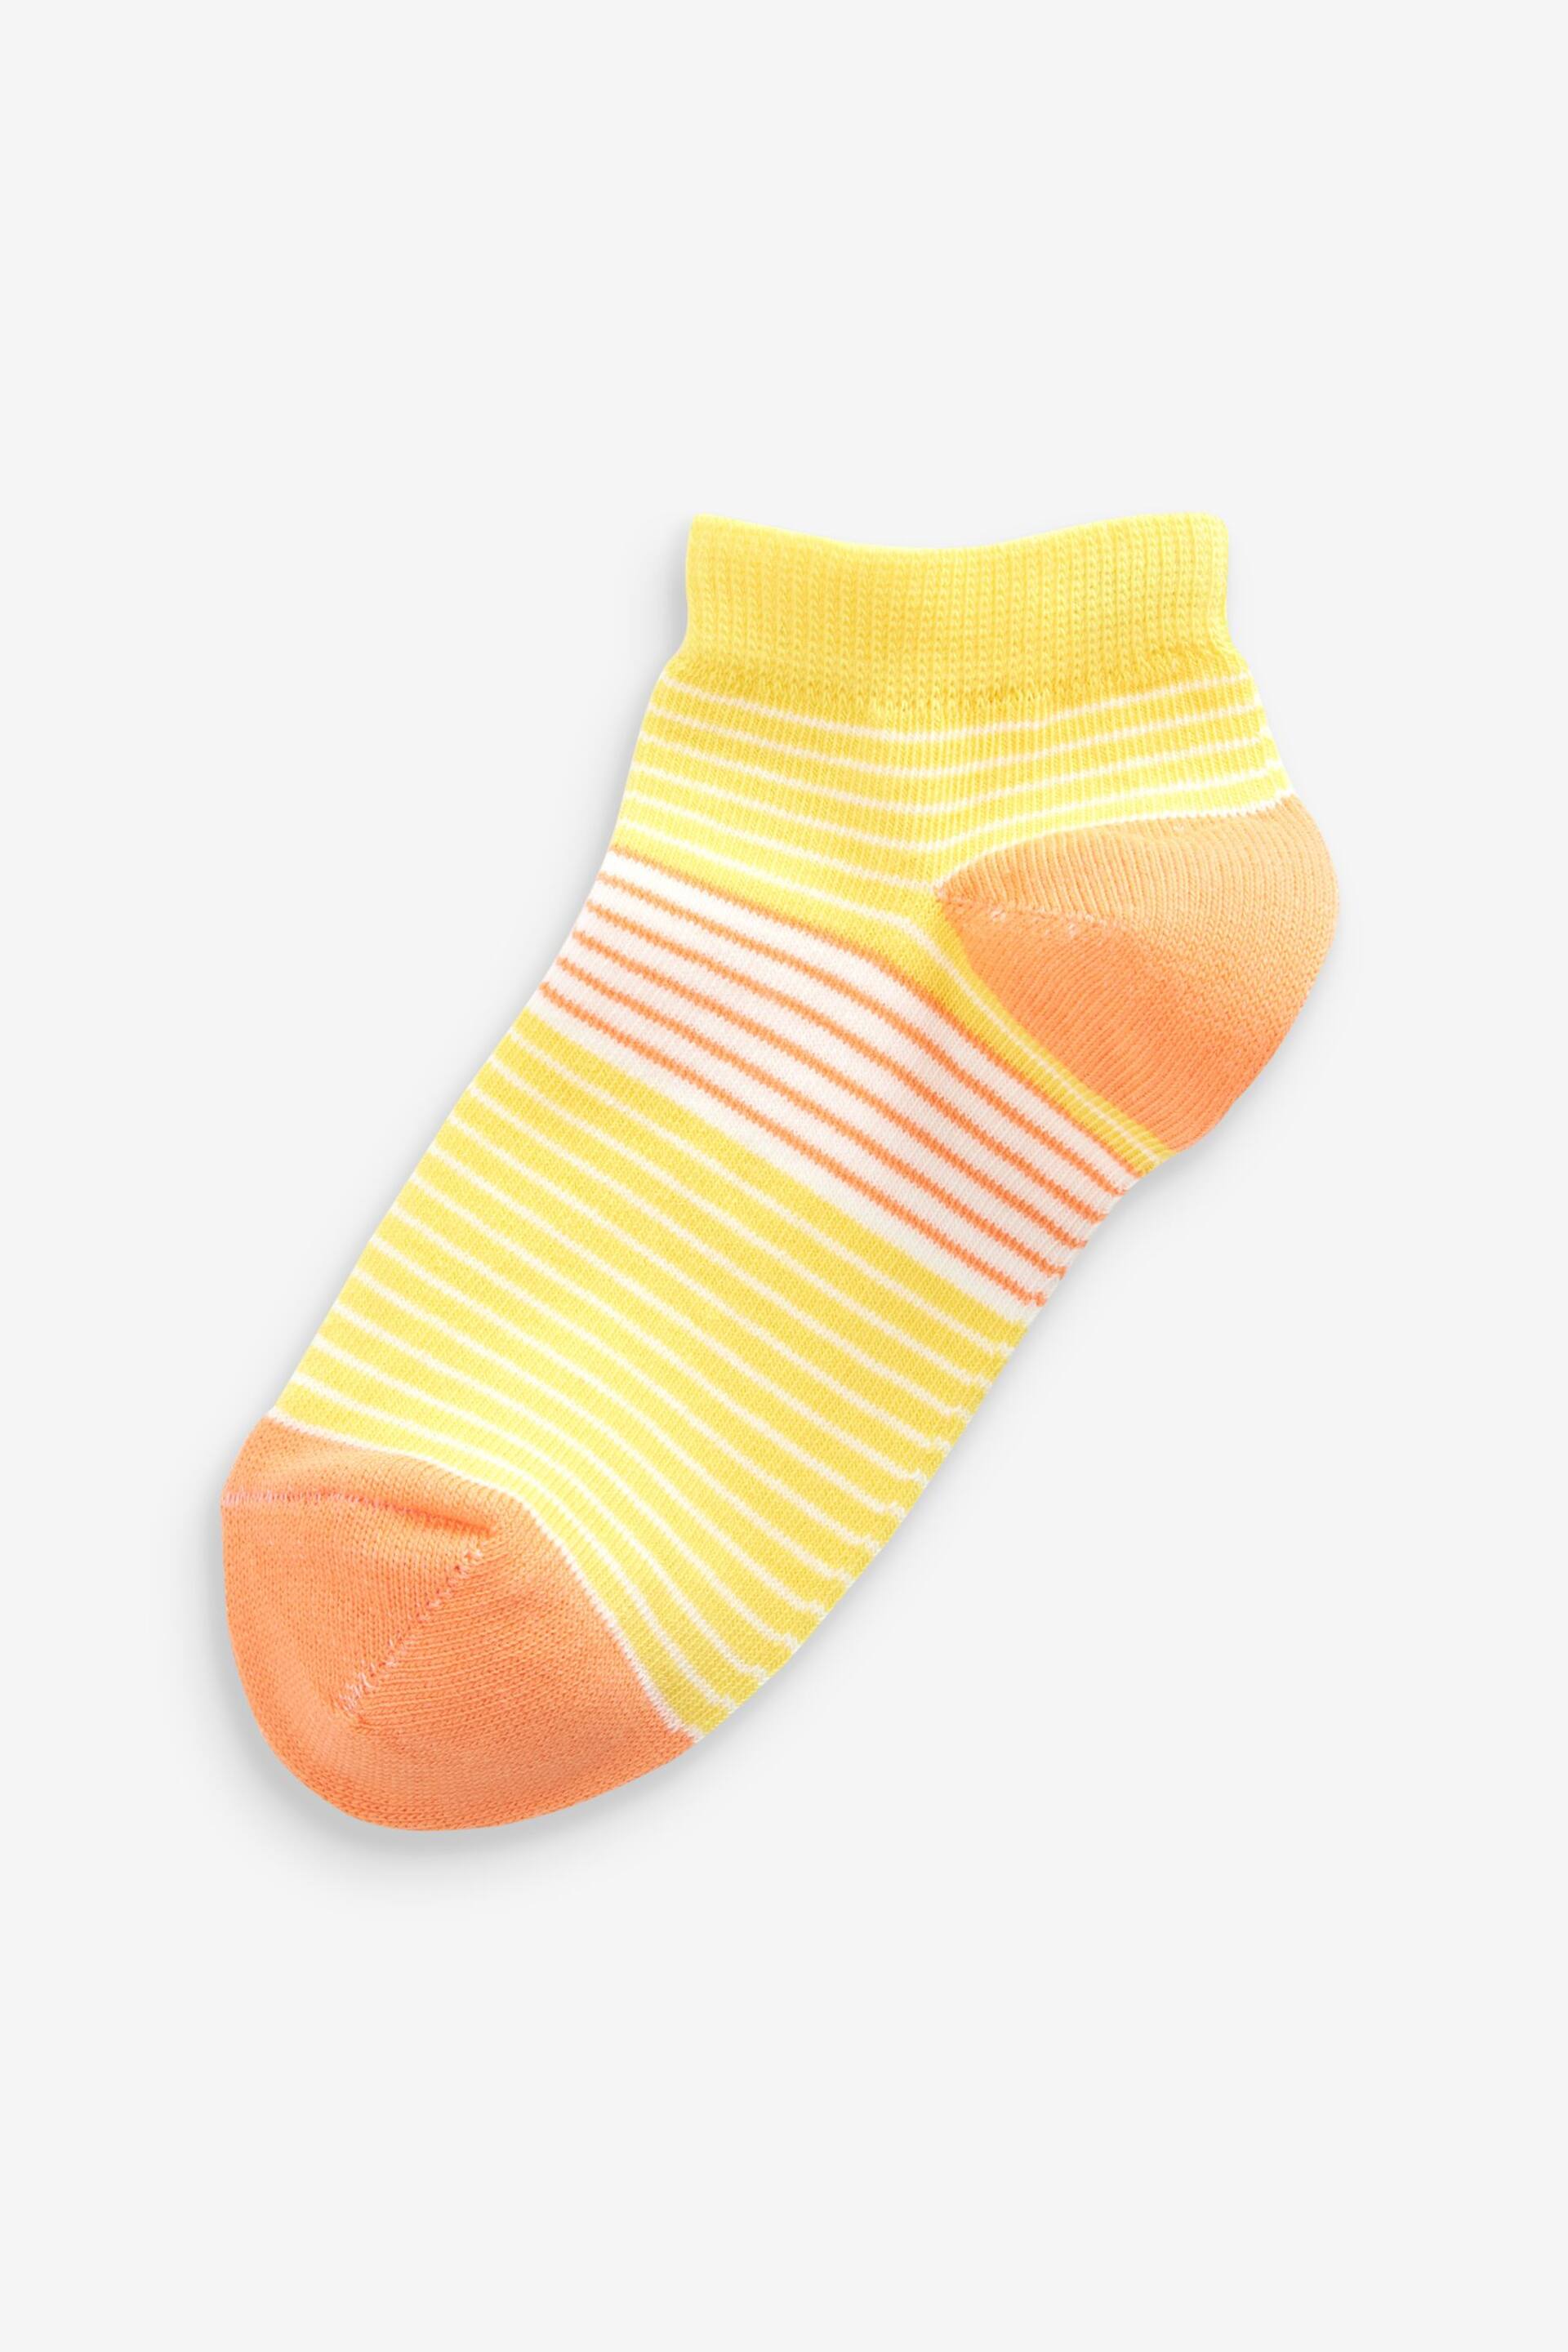 Multi 5 Pack Cotton Rich Bright Stripe Trainer Socks - Image 3 of 6